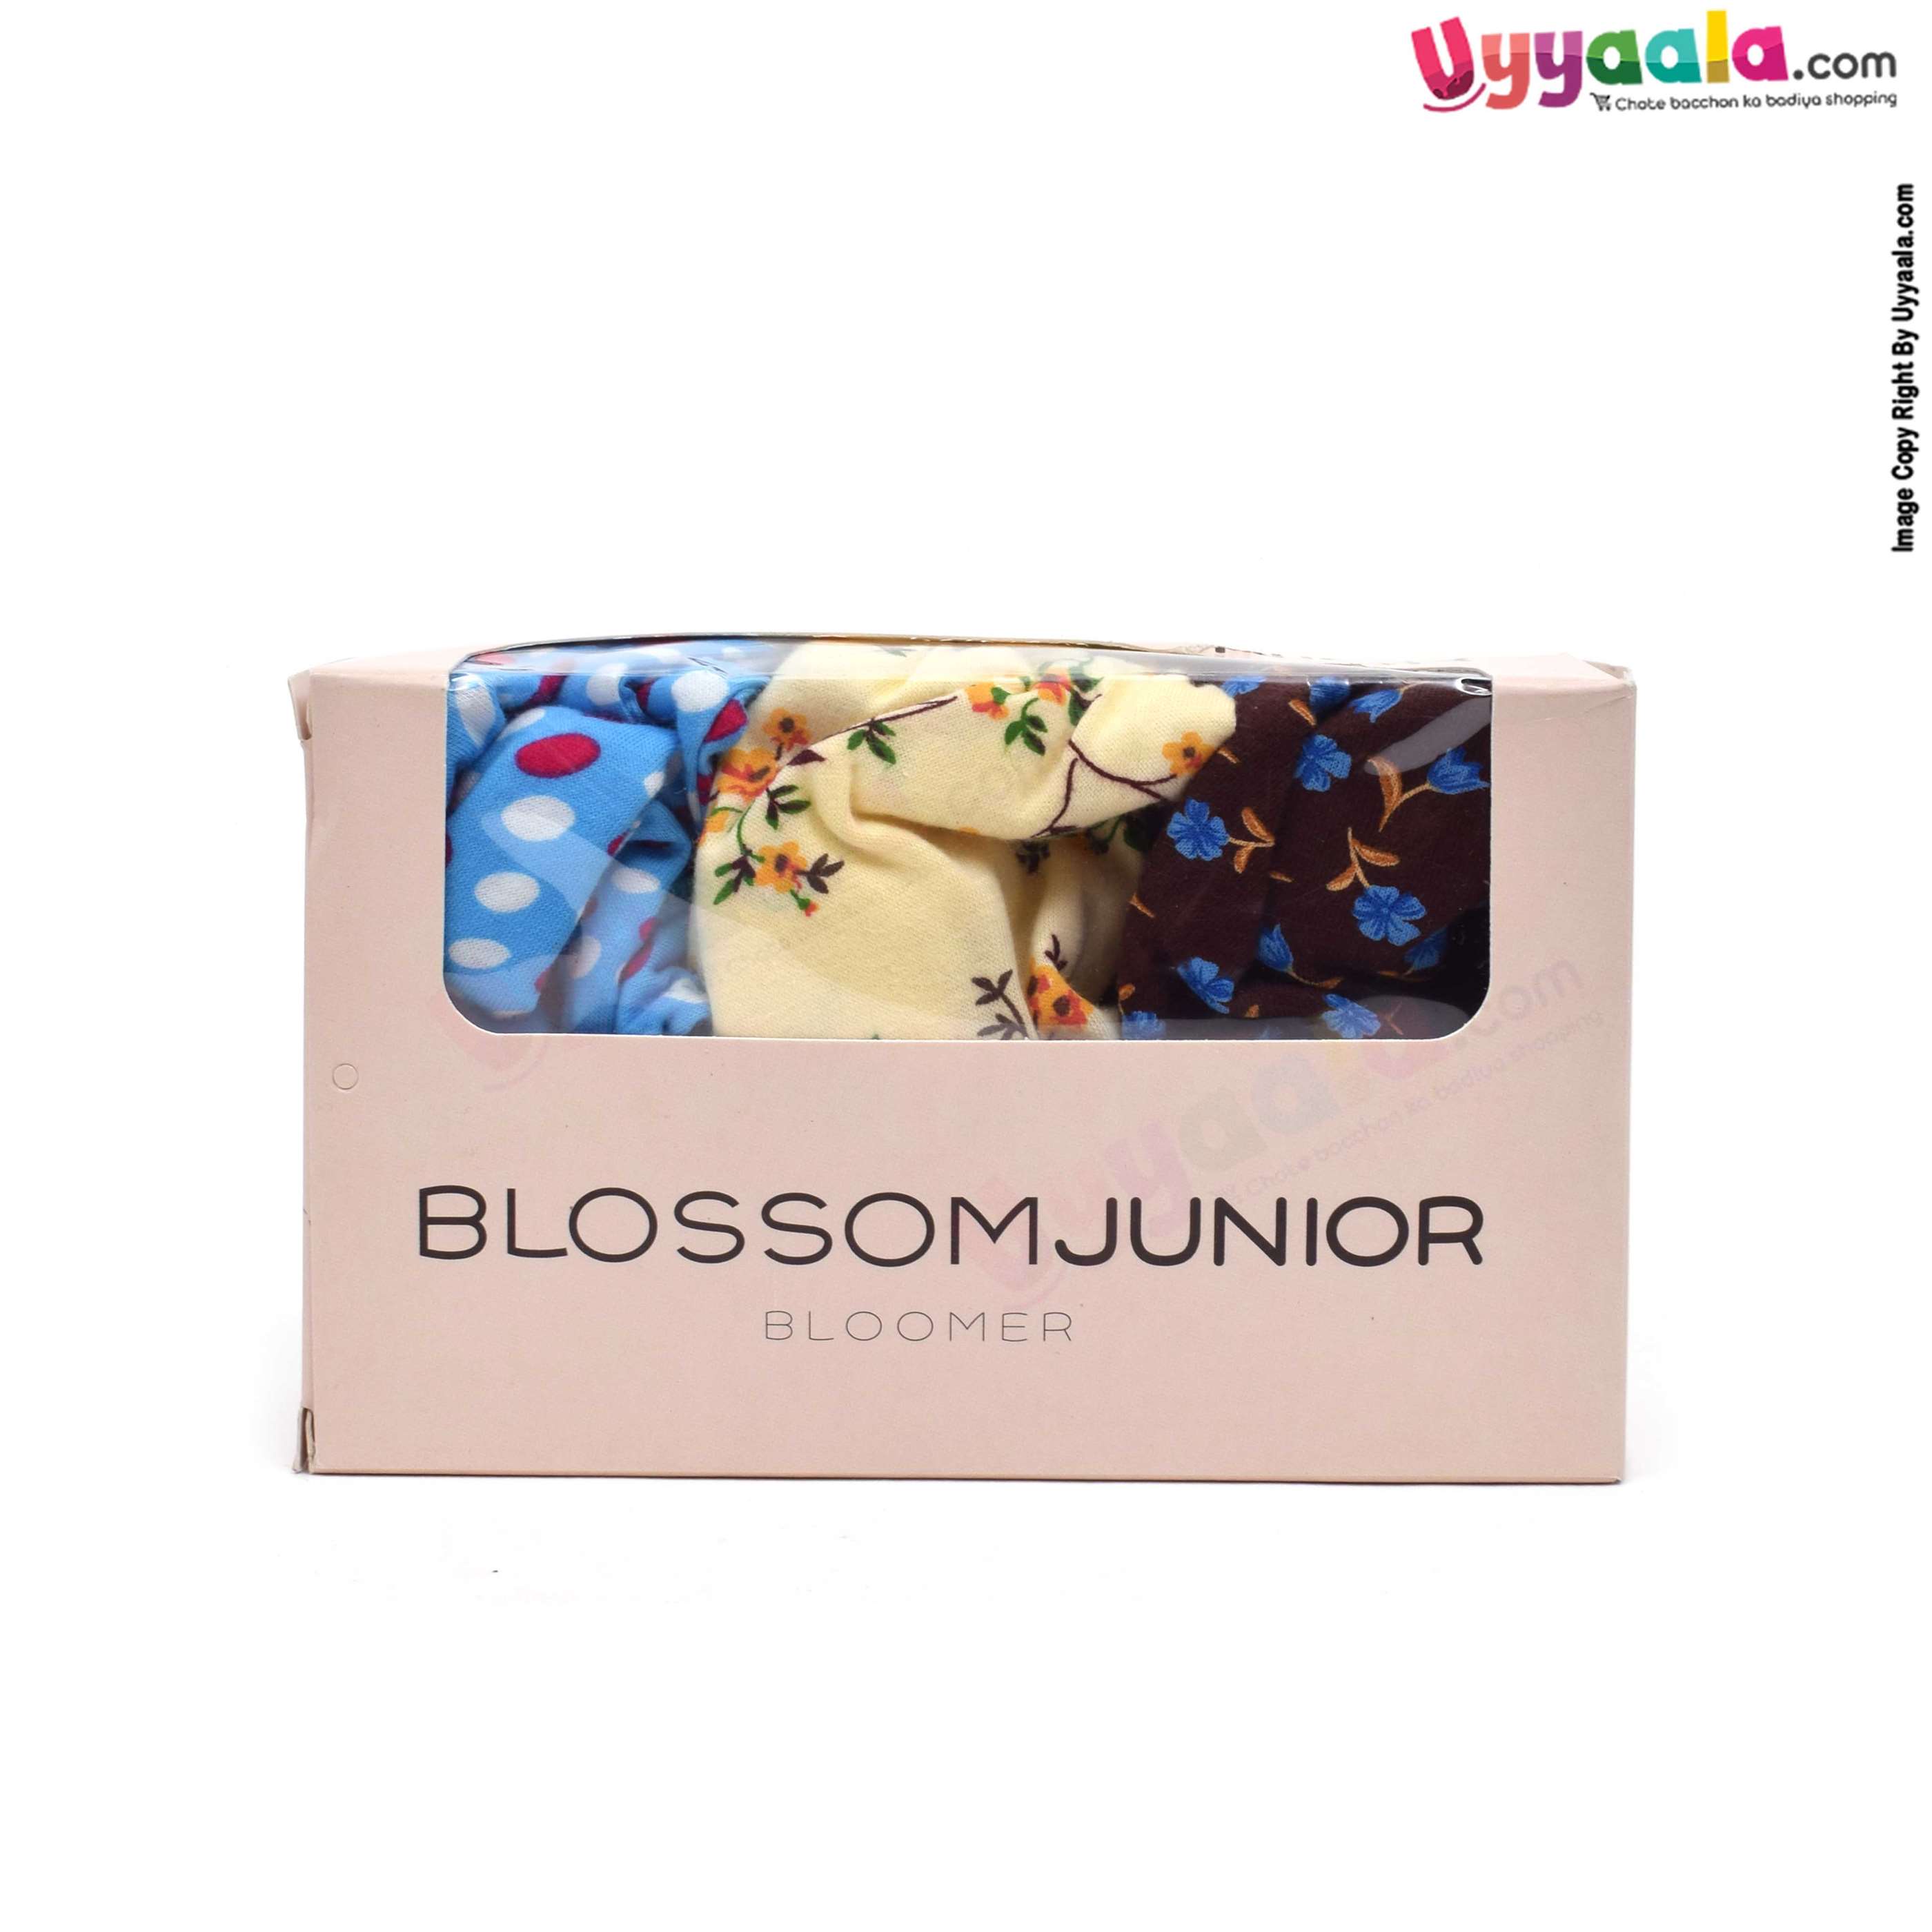 BLOSSOM JUNIOR Bloomer, premium cotton for girls, pack of 3 - multi color